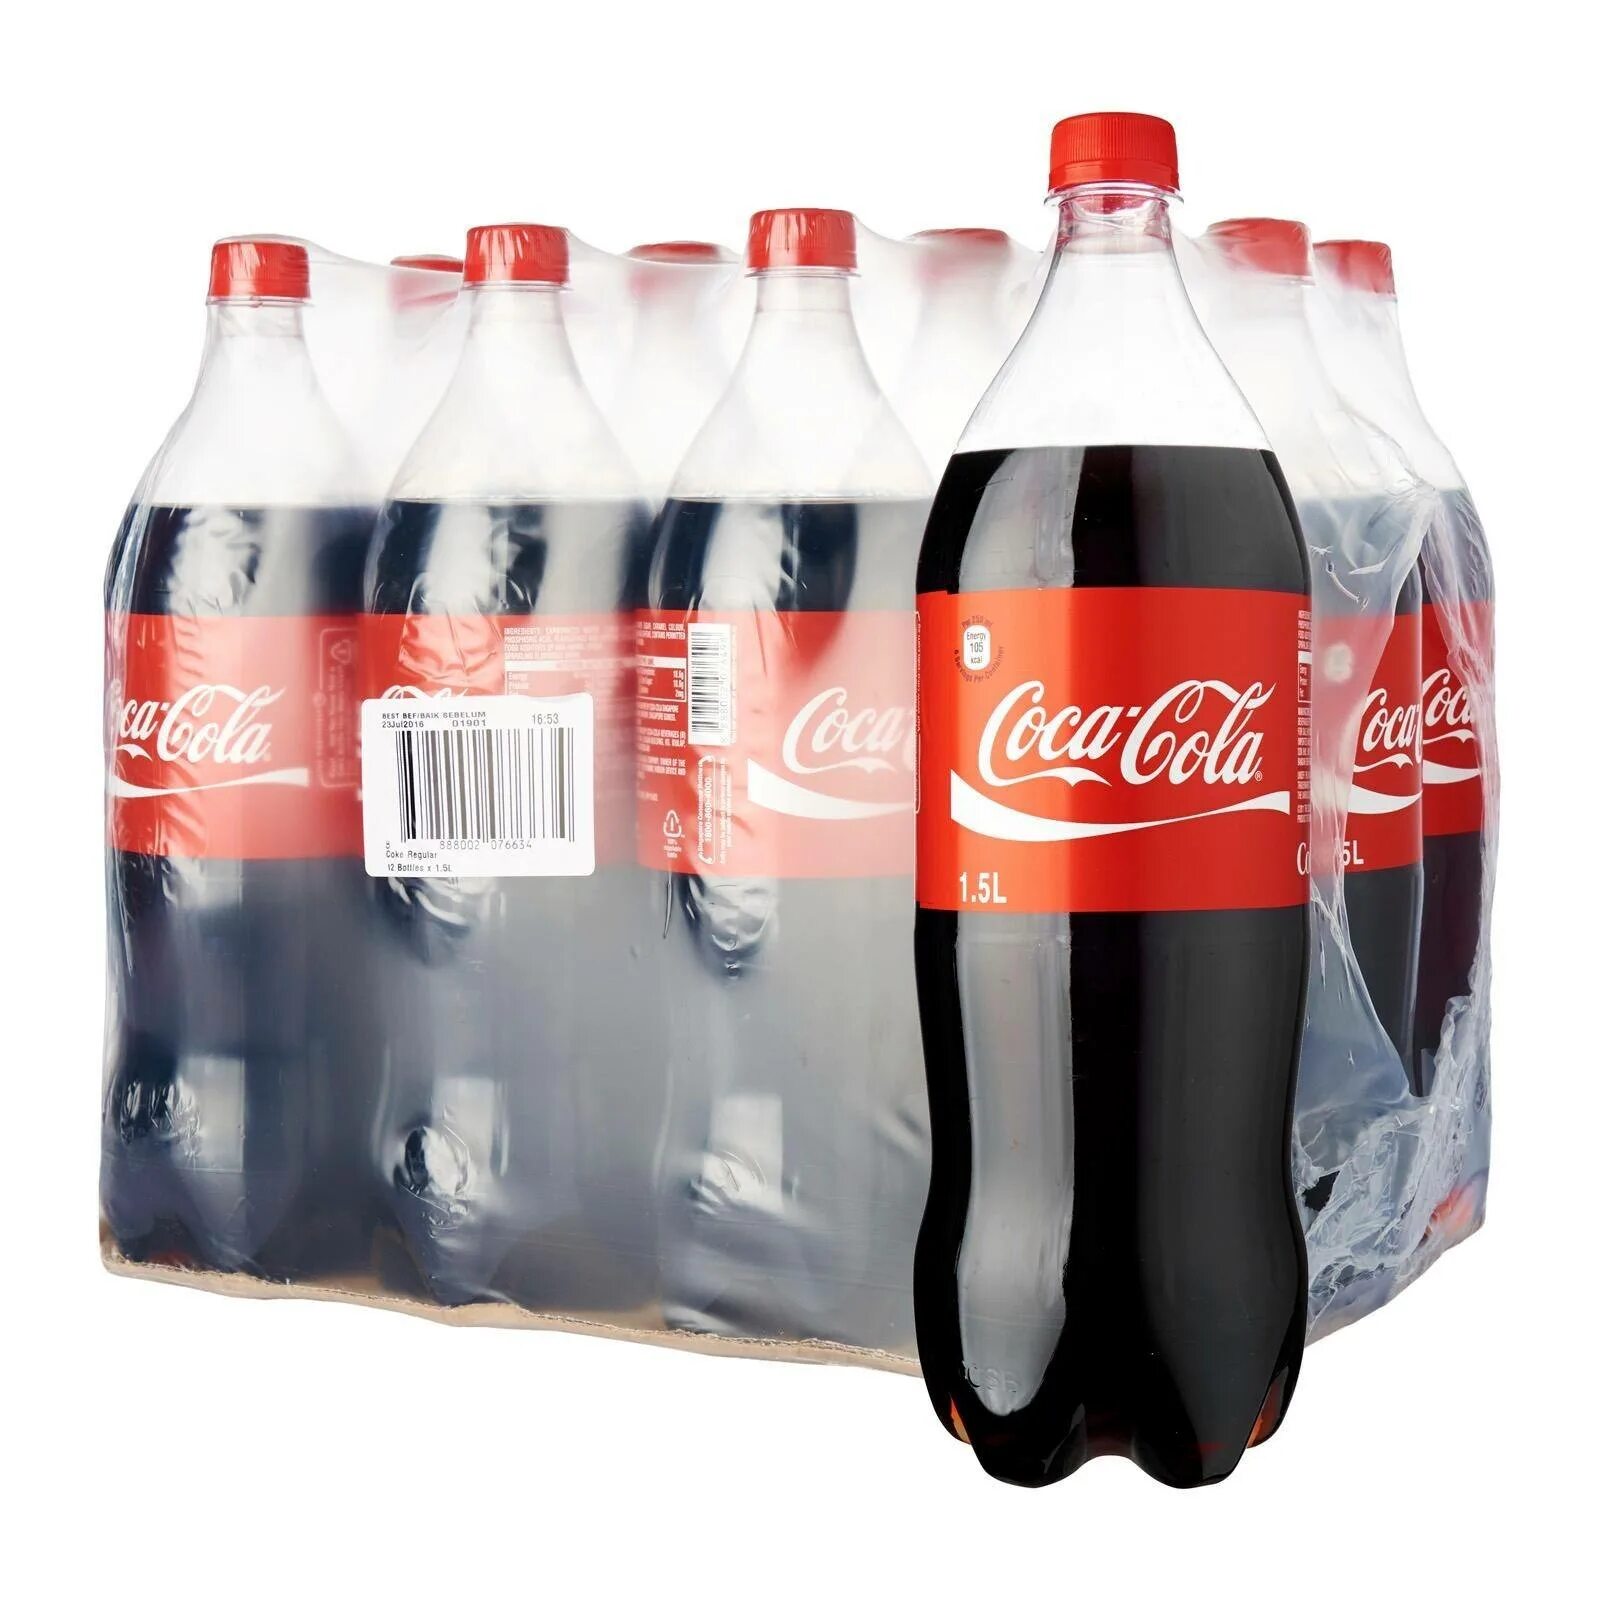 Кока кола литр купить. Coca Cola 1.5 l. Упаковка Кока кола 0.9л. Coca-Cola 1.5л. Напиток Coca-Cola 1.5л.